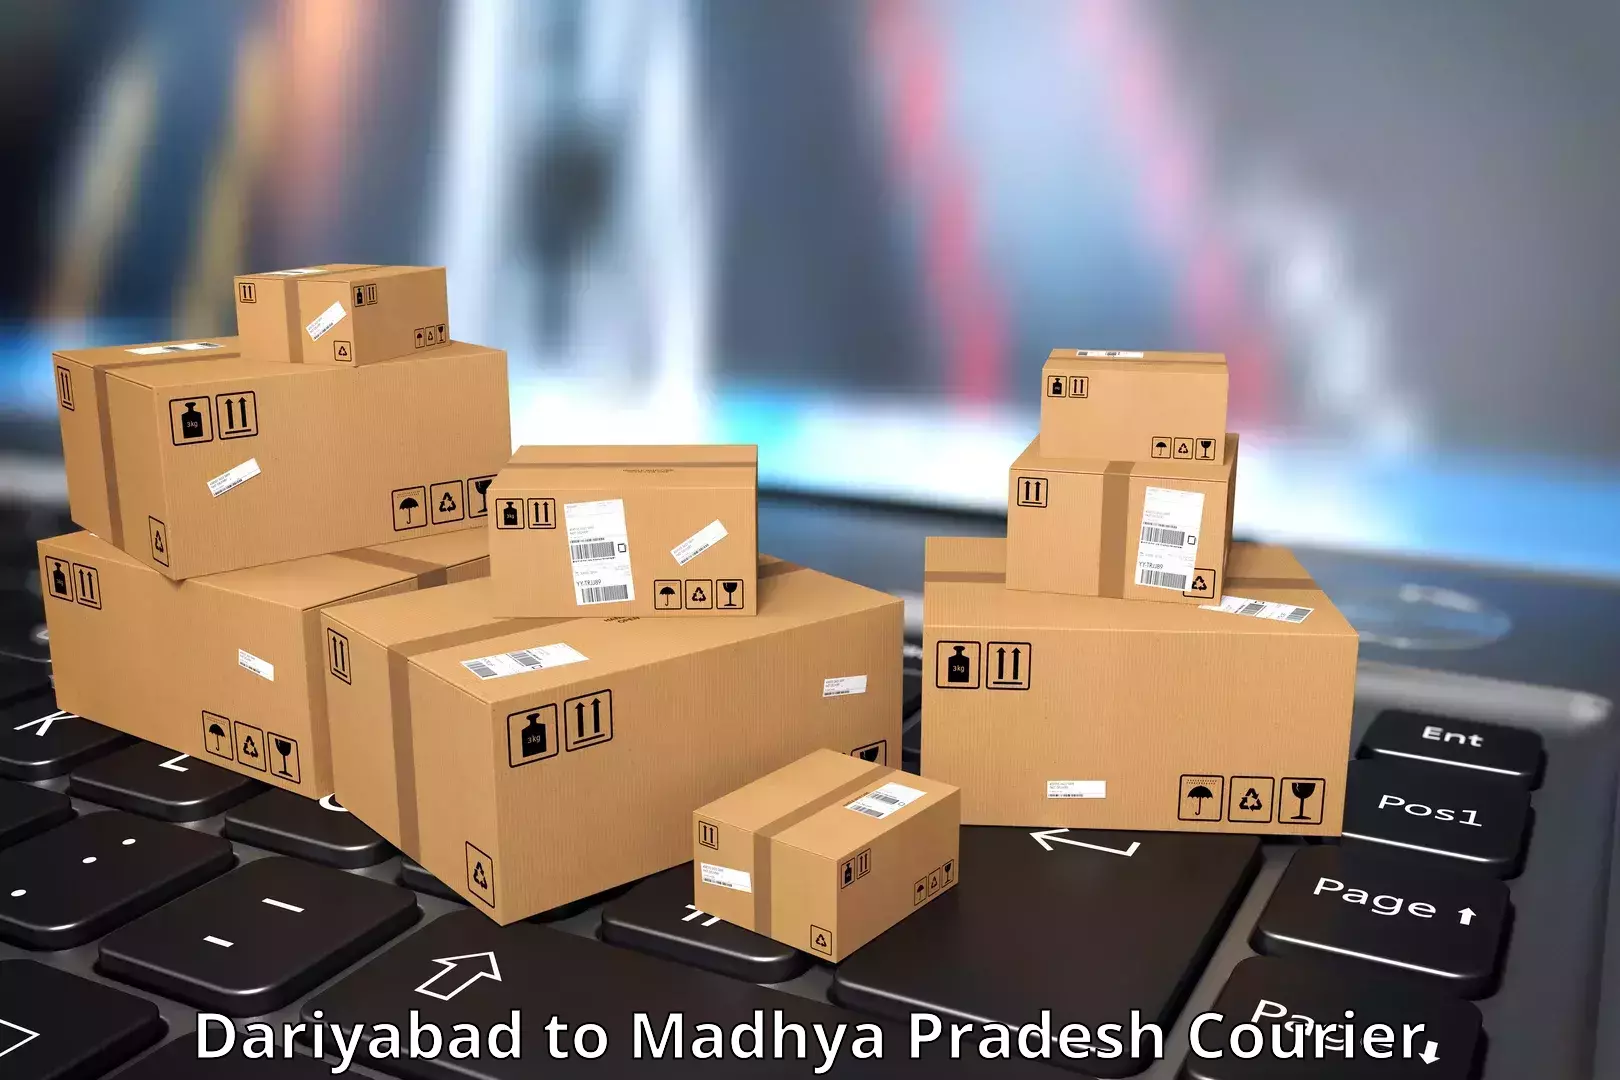 State-of-the-art courier technology Dariyabad to Bina